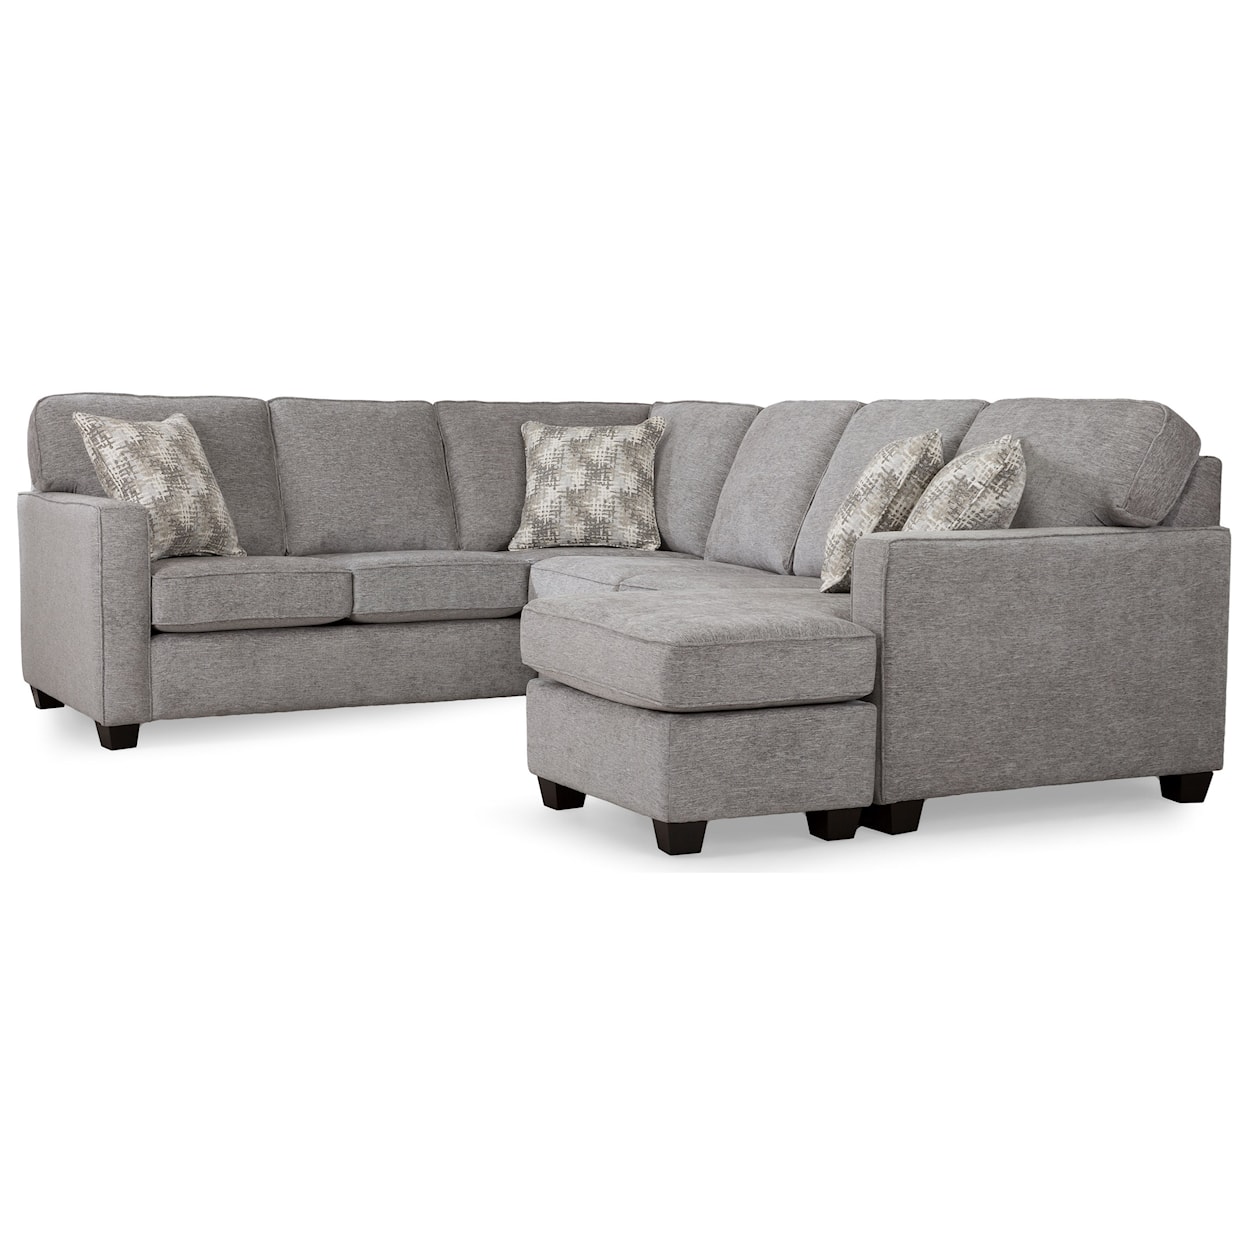 Taelor Designs Beverley Sectional Sofa